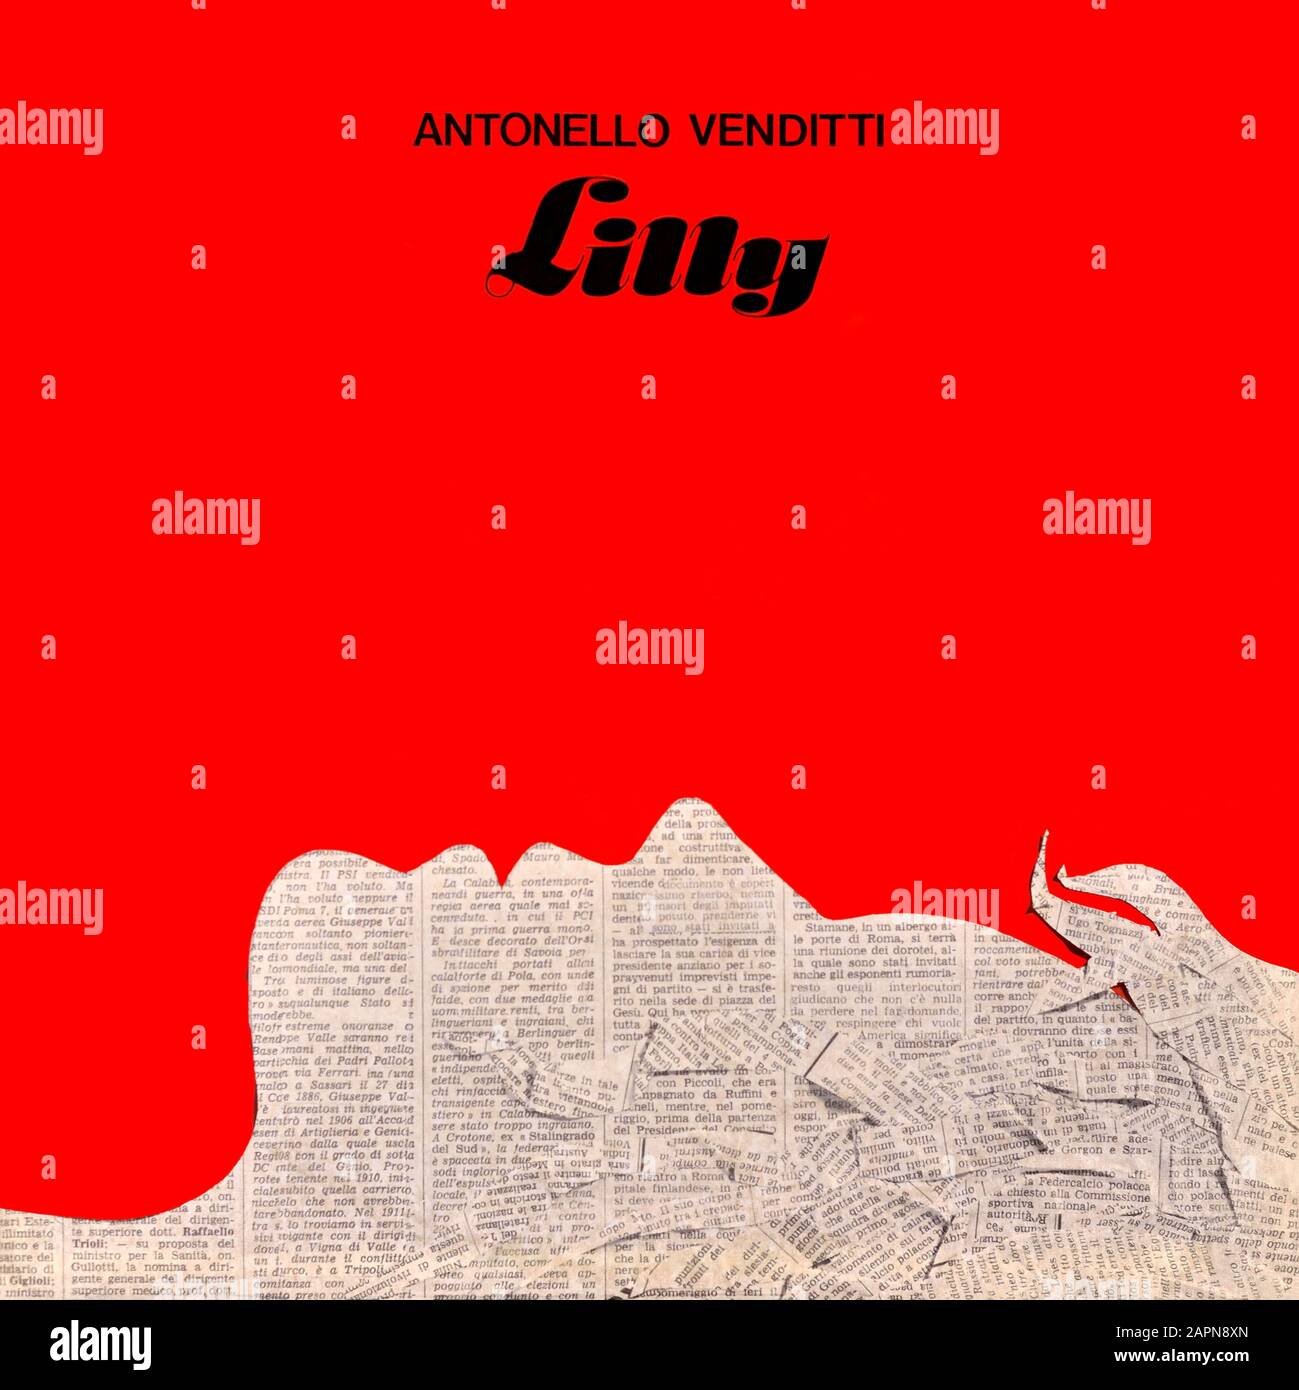 Antonello Venditti - original Vinyl Album Cover - Lilly - 1975 Stockfoto